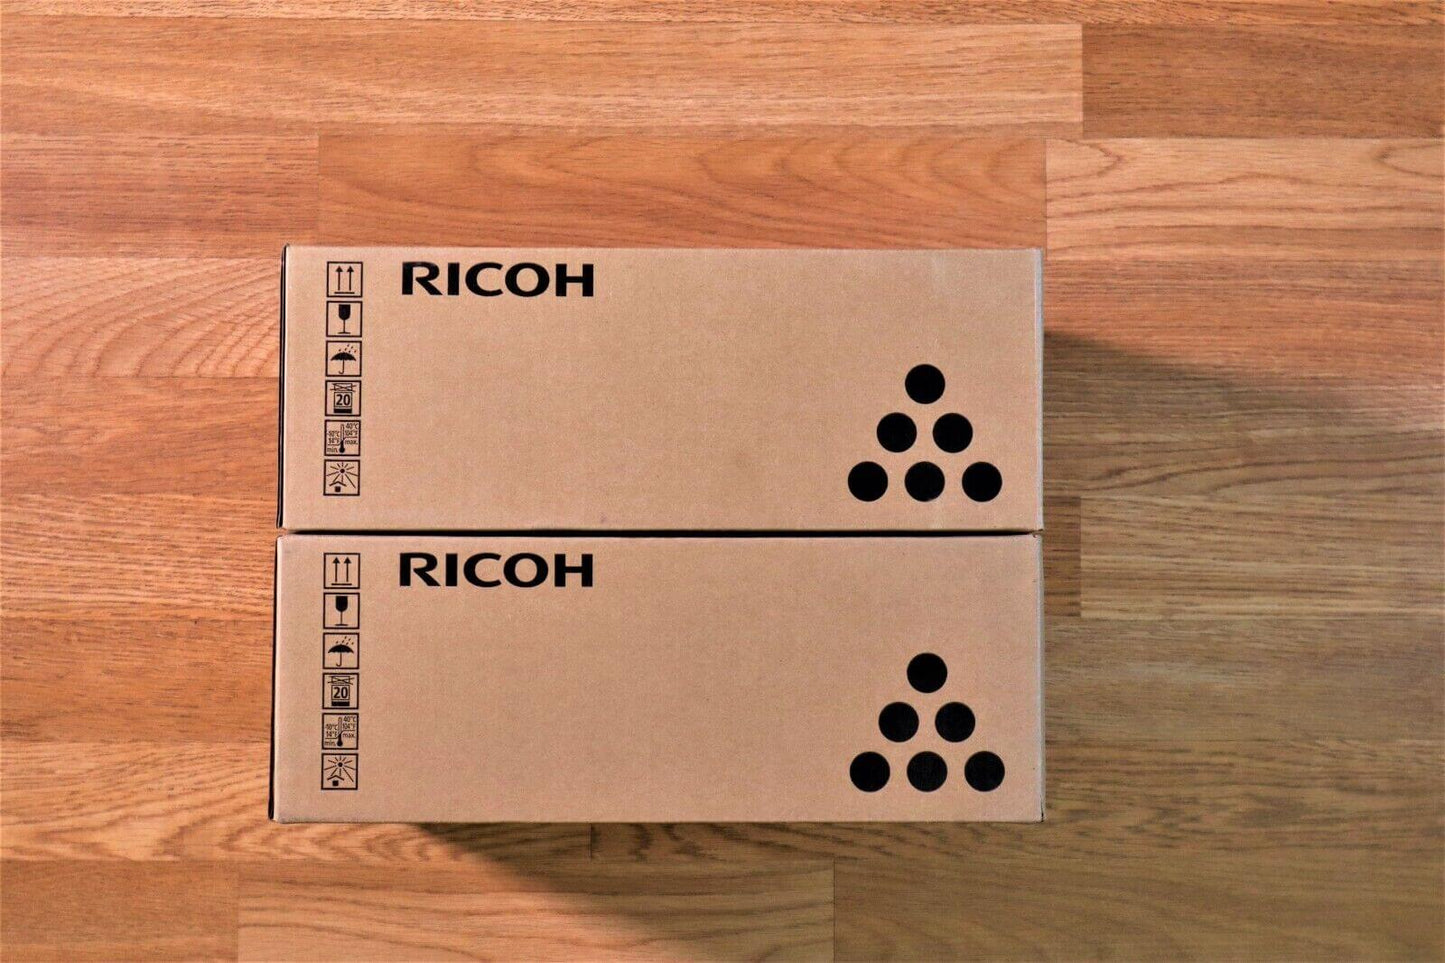 Genuine Ricoh SP 3710X Black Print Cartridges EDP.408284 SP 3710DN /SP 3710SF - copier-clearance-center